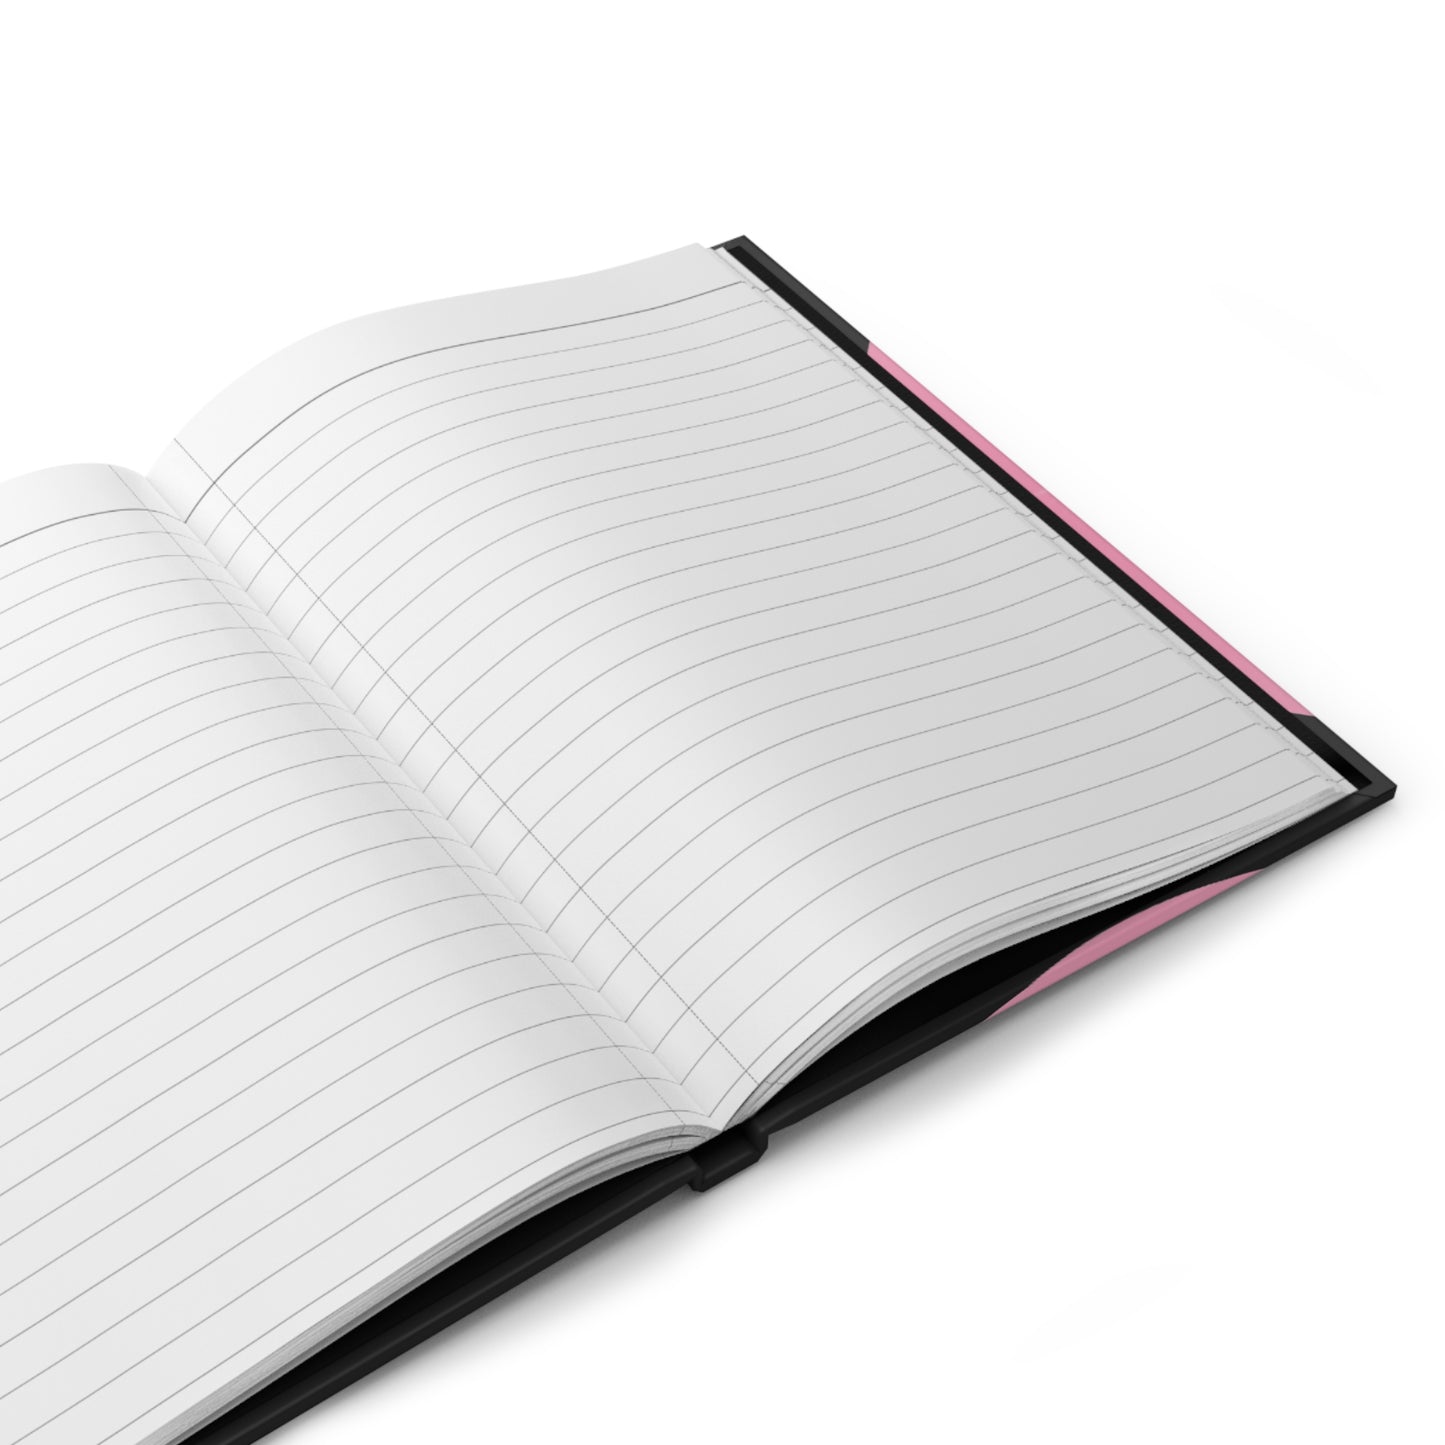 Kewpie Doll Fae Blank Lined Journal